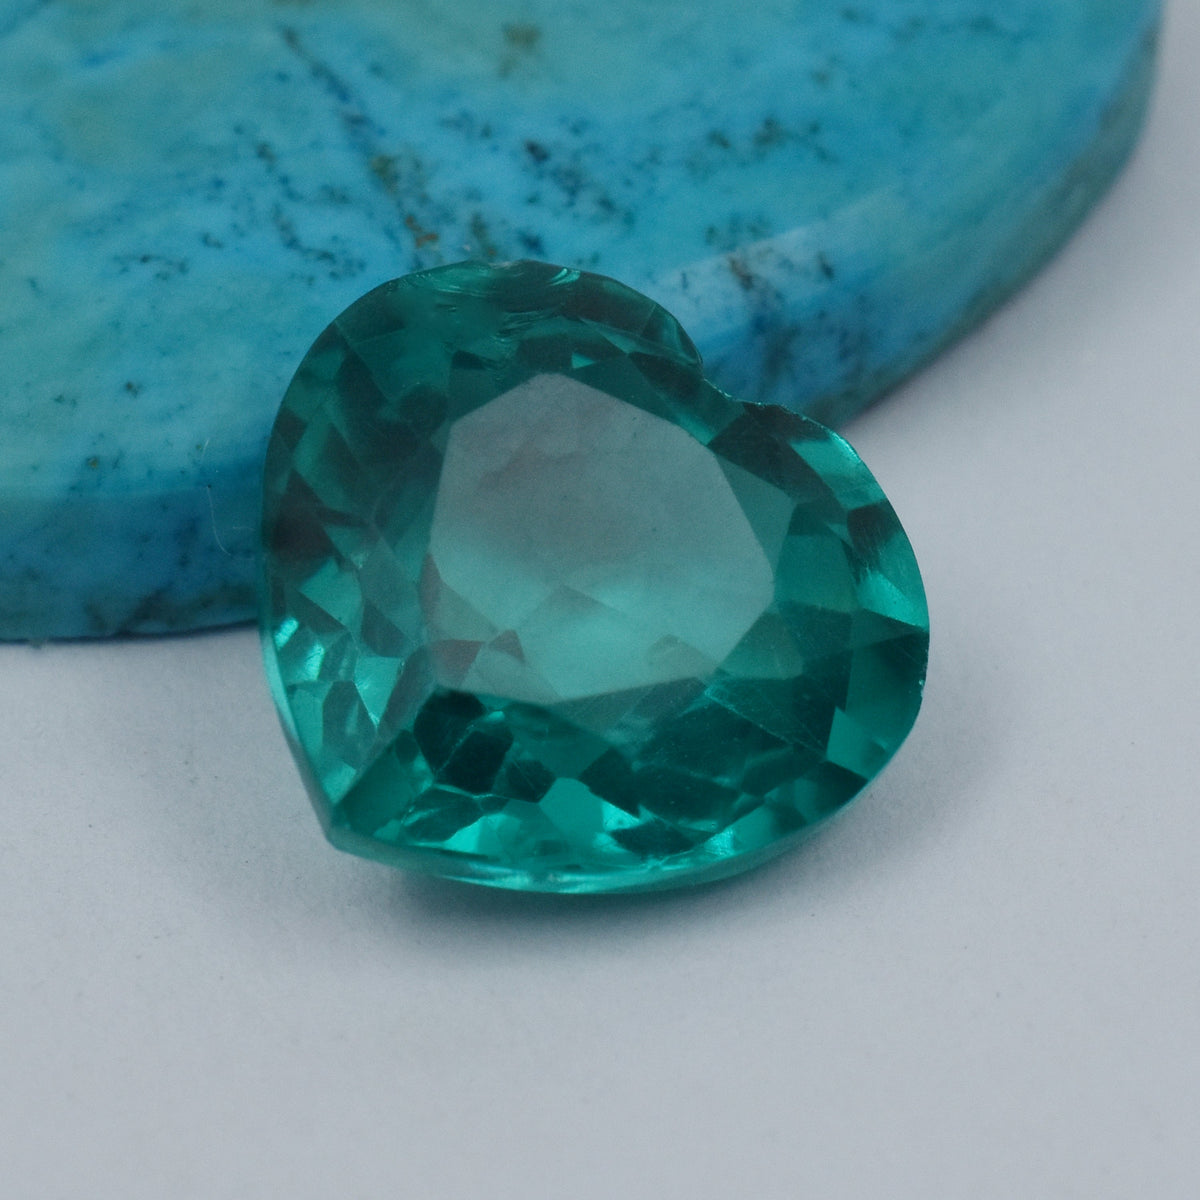 Stunning Tourmaline Gemstone 10.45 Carat Green Tourmaline Certified Natural Loose Gemstone | Best For Gift | GIFT For Her / Him